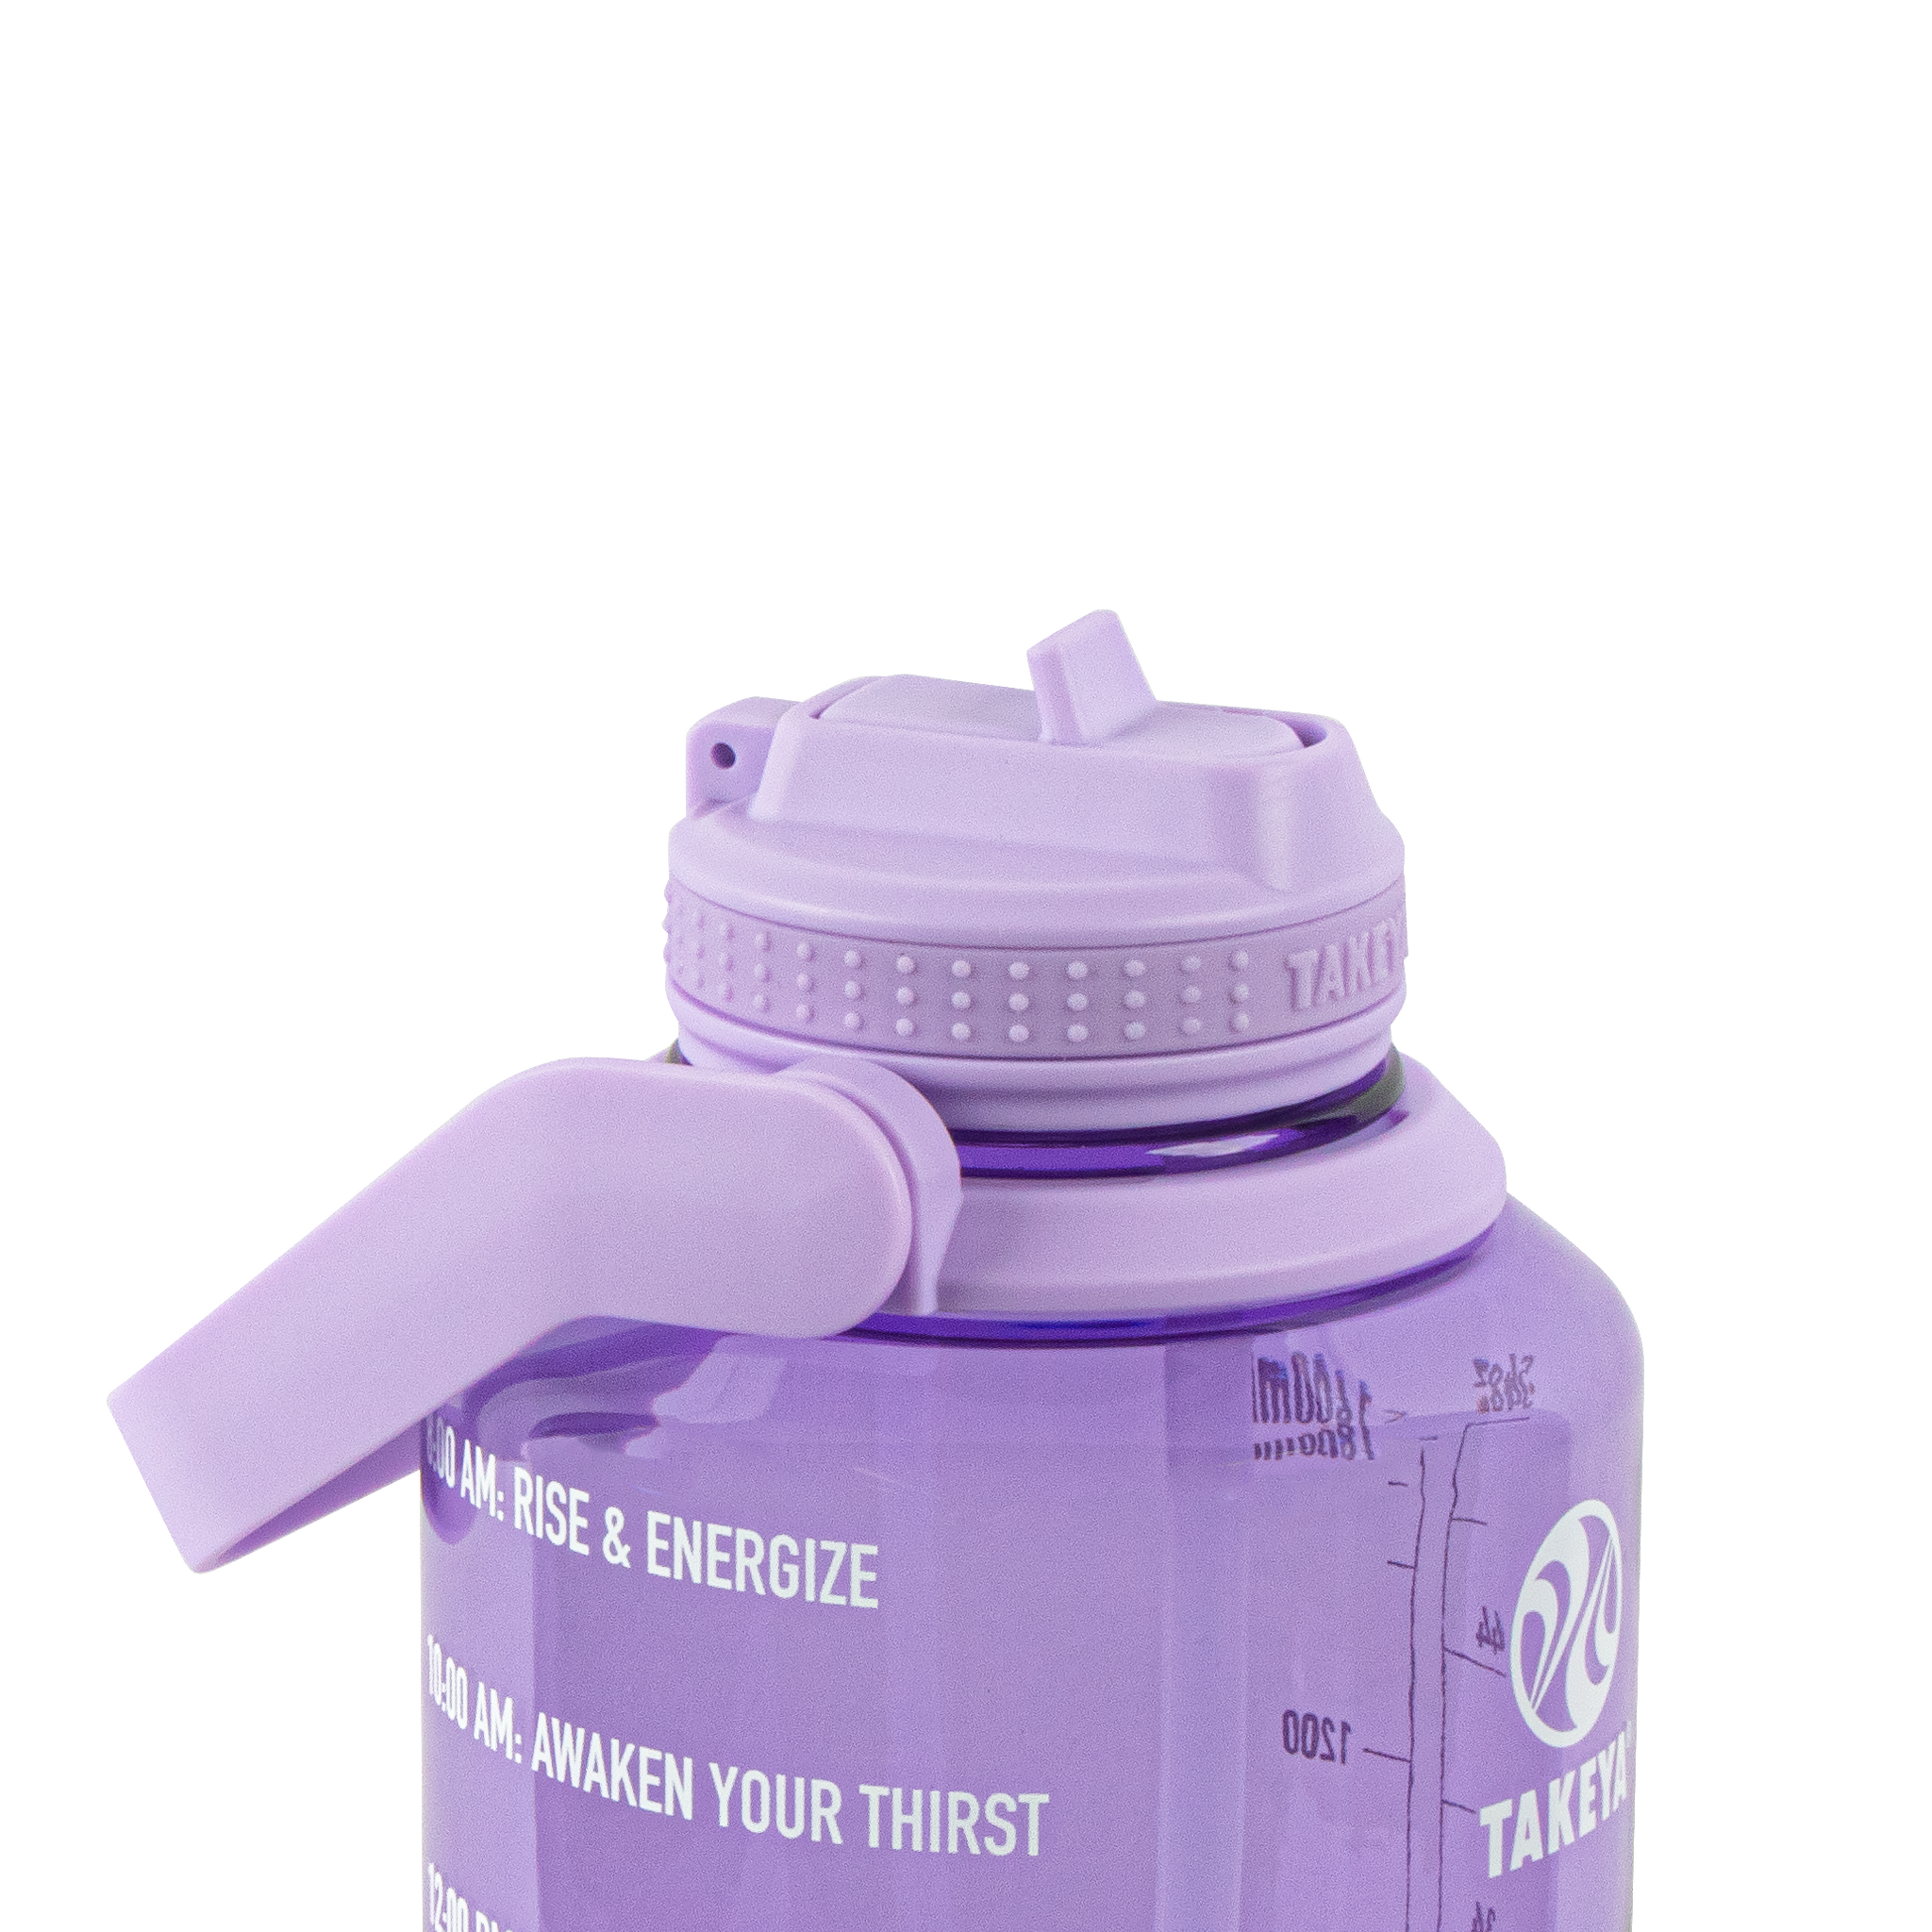 64oz Plastic Tracker Water Bottle Purple - Room Essentials™